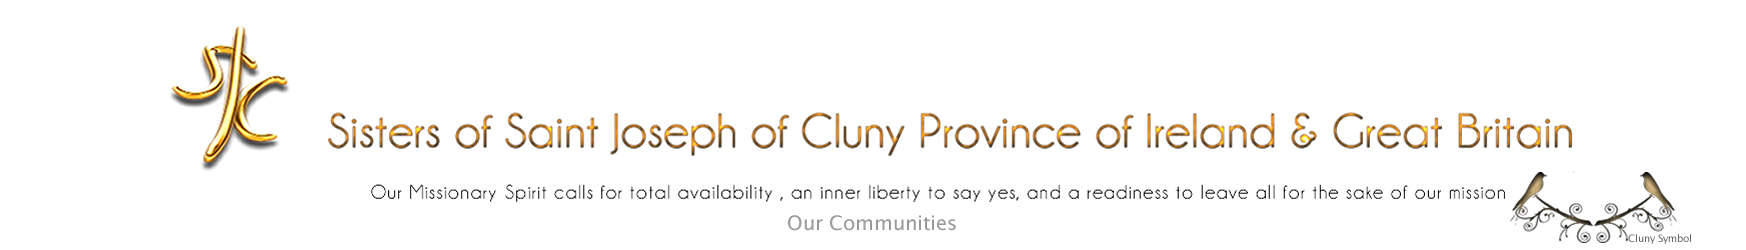 cluny communities